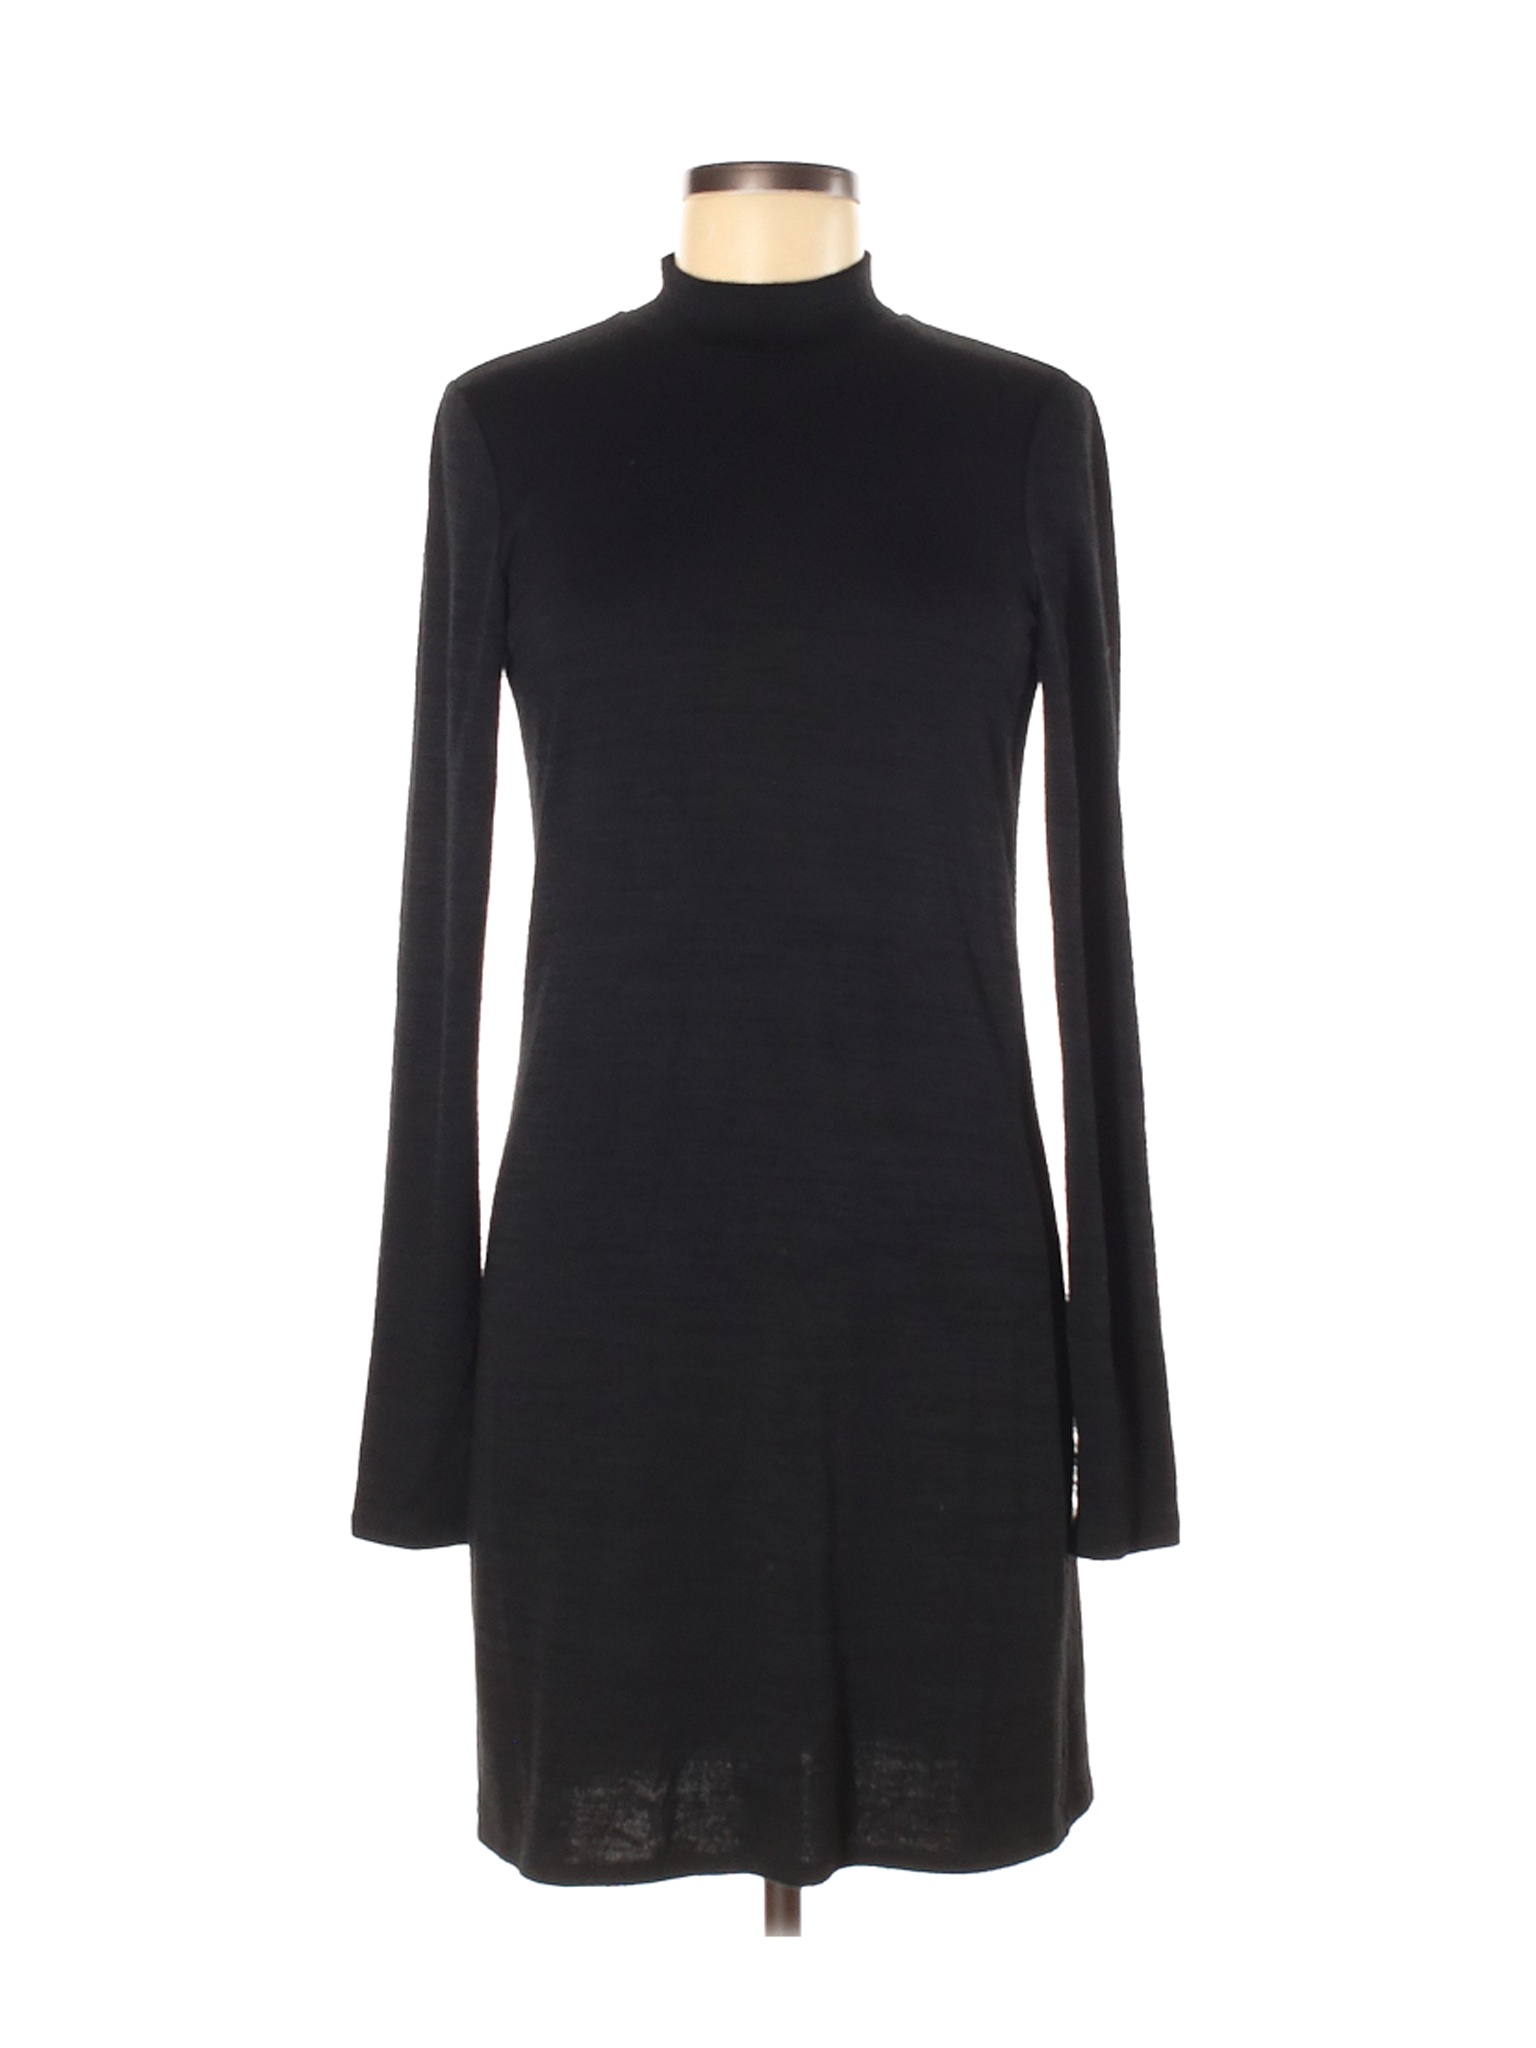 Wilfred Free Women Black Casual Dress M | eBay